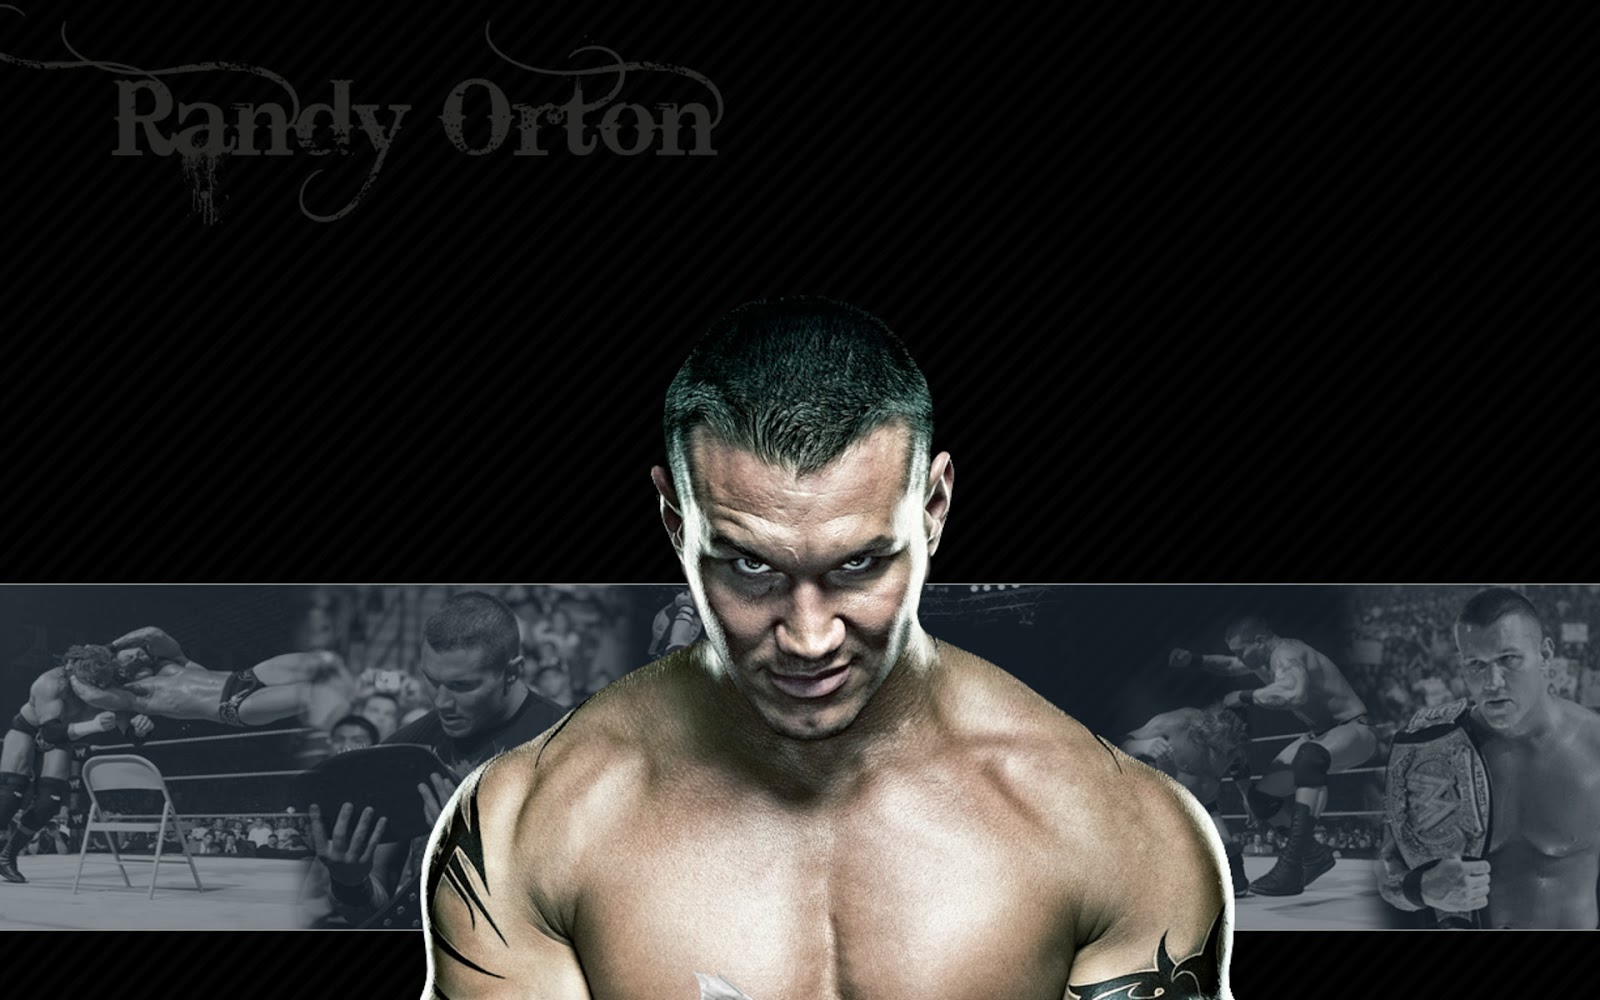 randy orton wallpaper download,bodybuilder,barechested,muscle,professional wrestling,wrestler